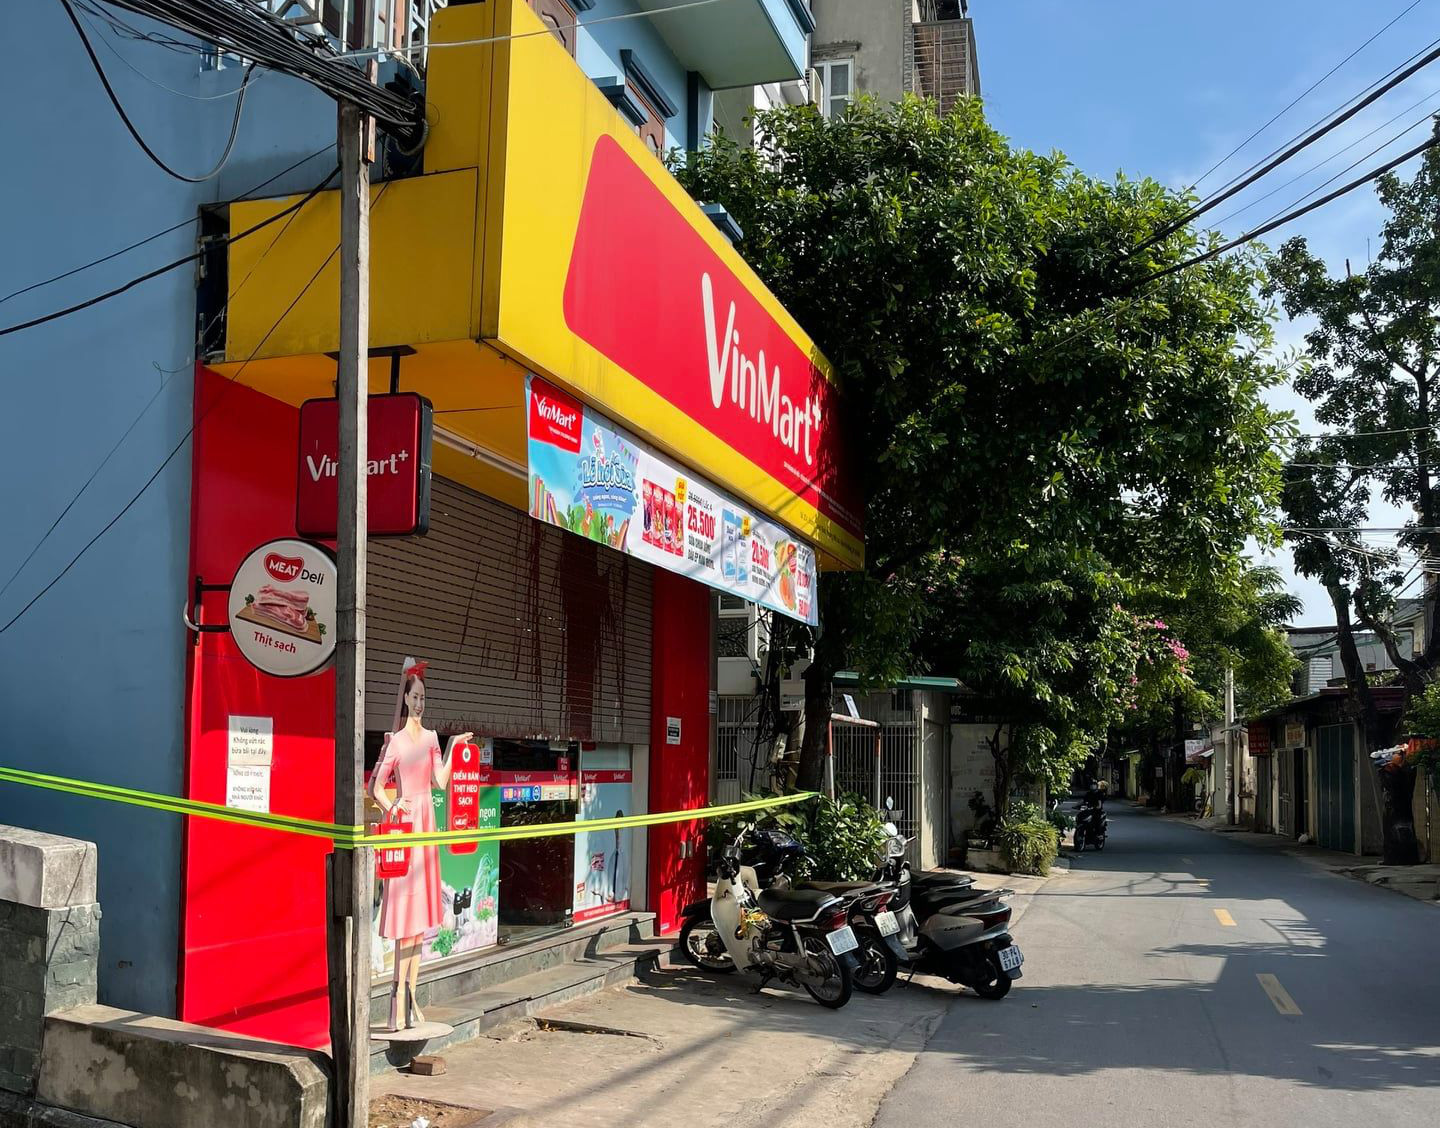 Trade ministry guarantees sufficient goods supplies in Hanoi despite supermarket suspension